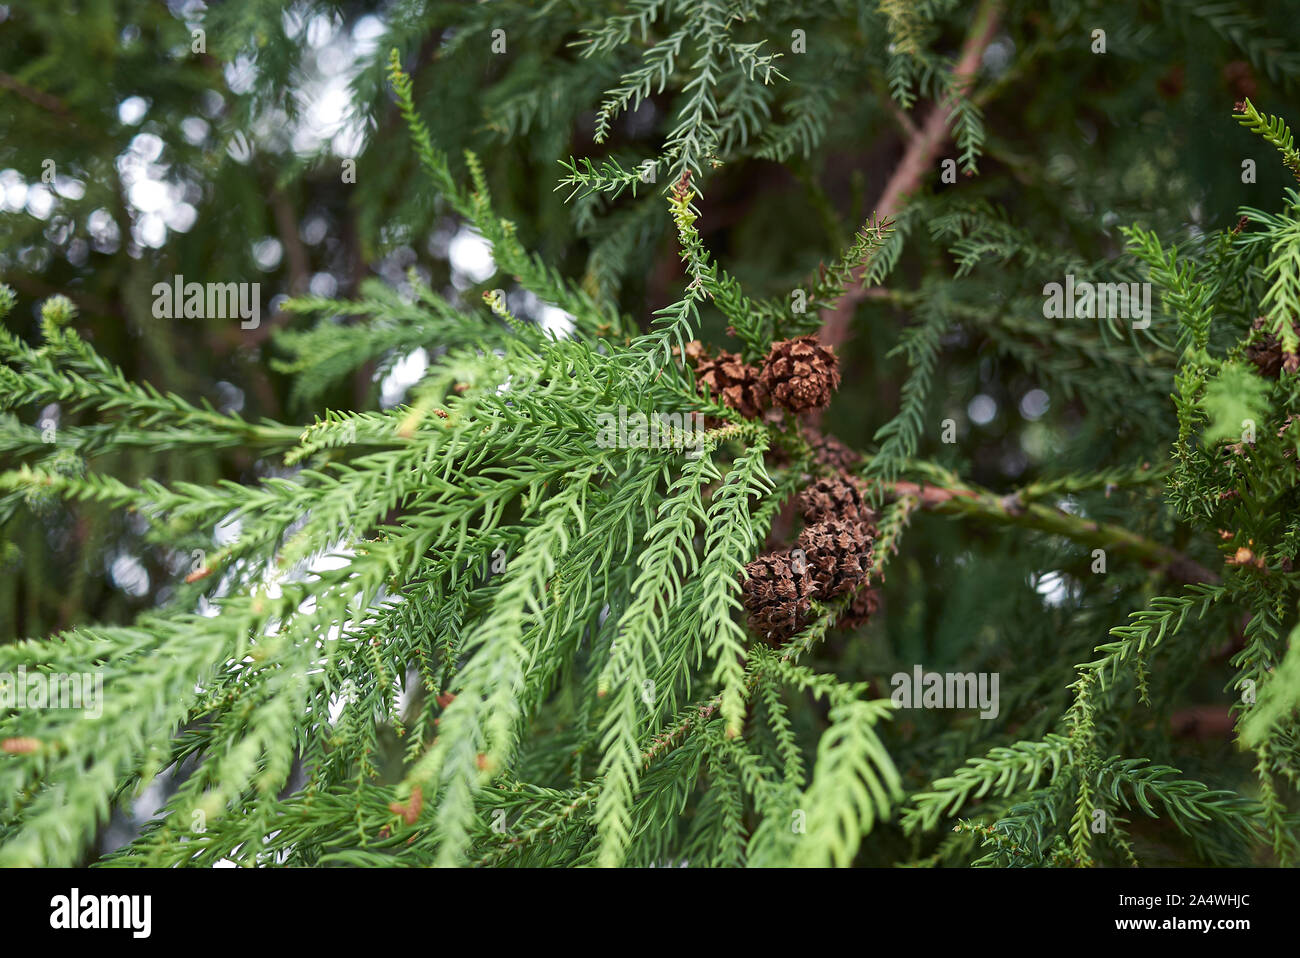 Cryptomeria japonica evergreen tree Stock Photo